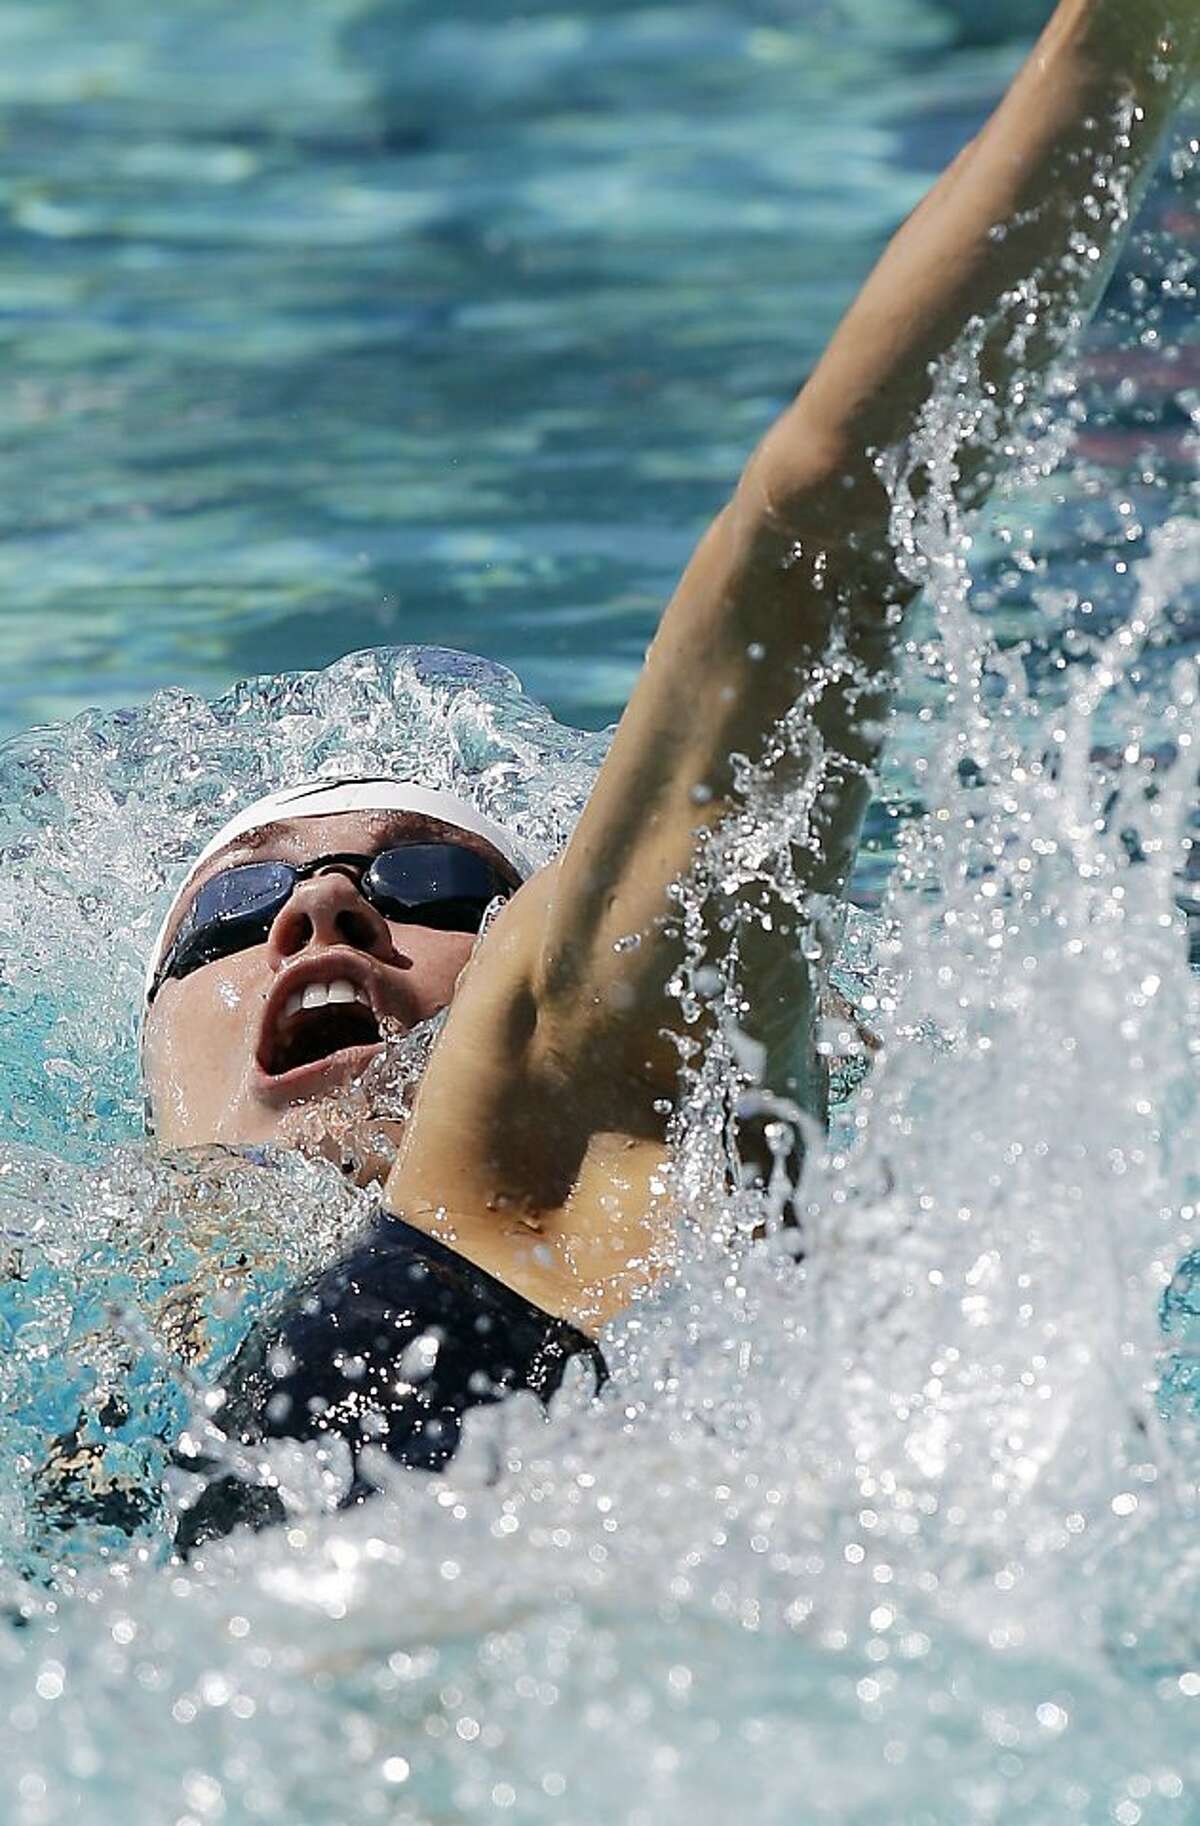 Natalie Coughlin competes in the 100-meter backstroke during the Santa Clara International Grand Prix swimming competition, Sunday, June 3, 2012, in Santa Clara, Calif. (AP Photo/Marcio Jose Sanchez)